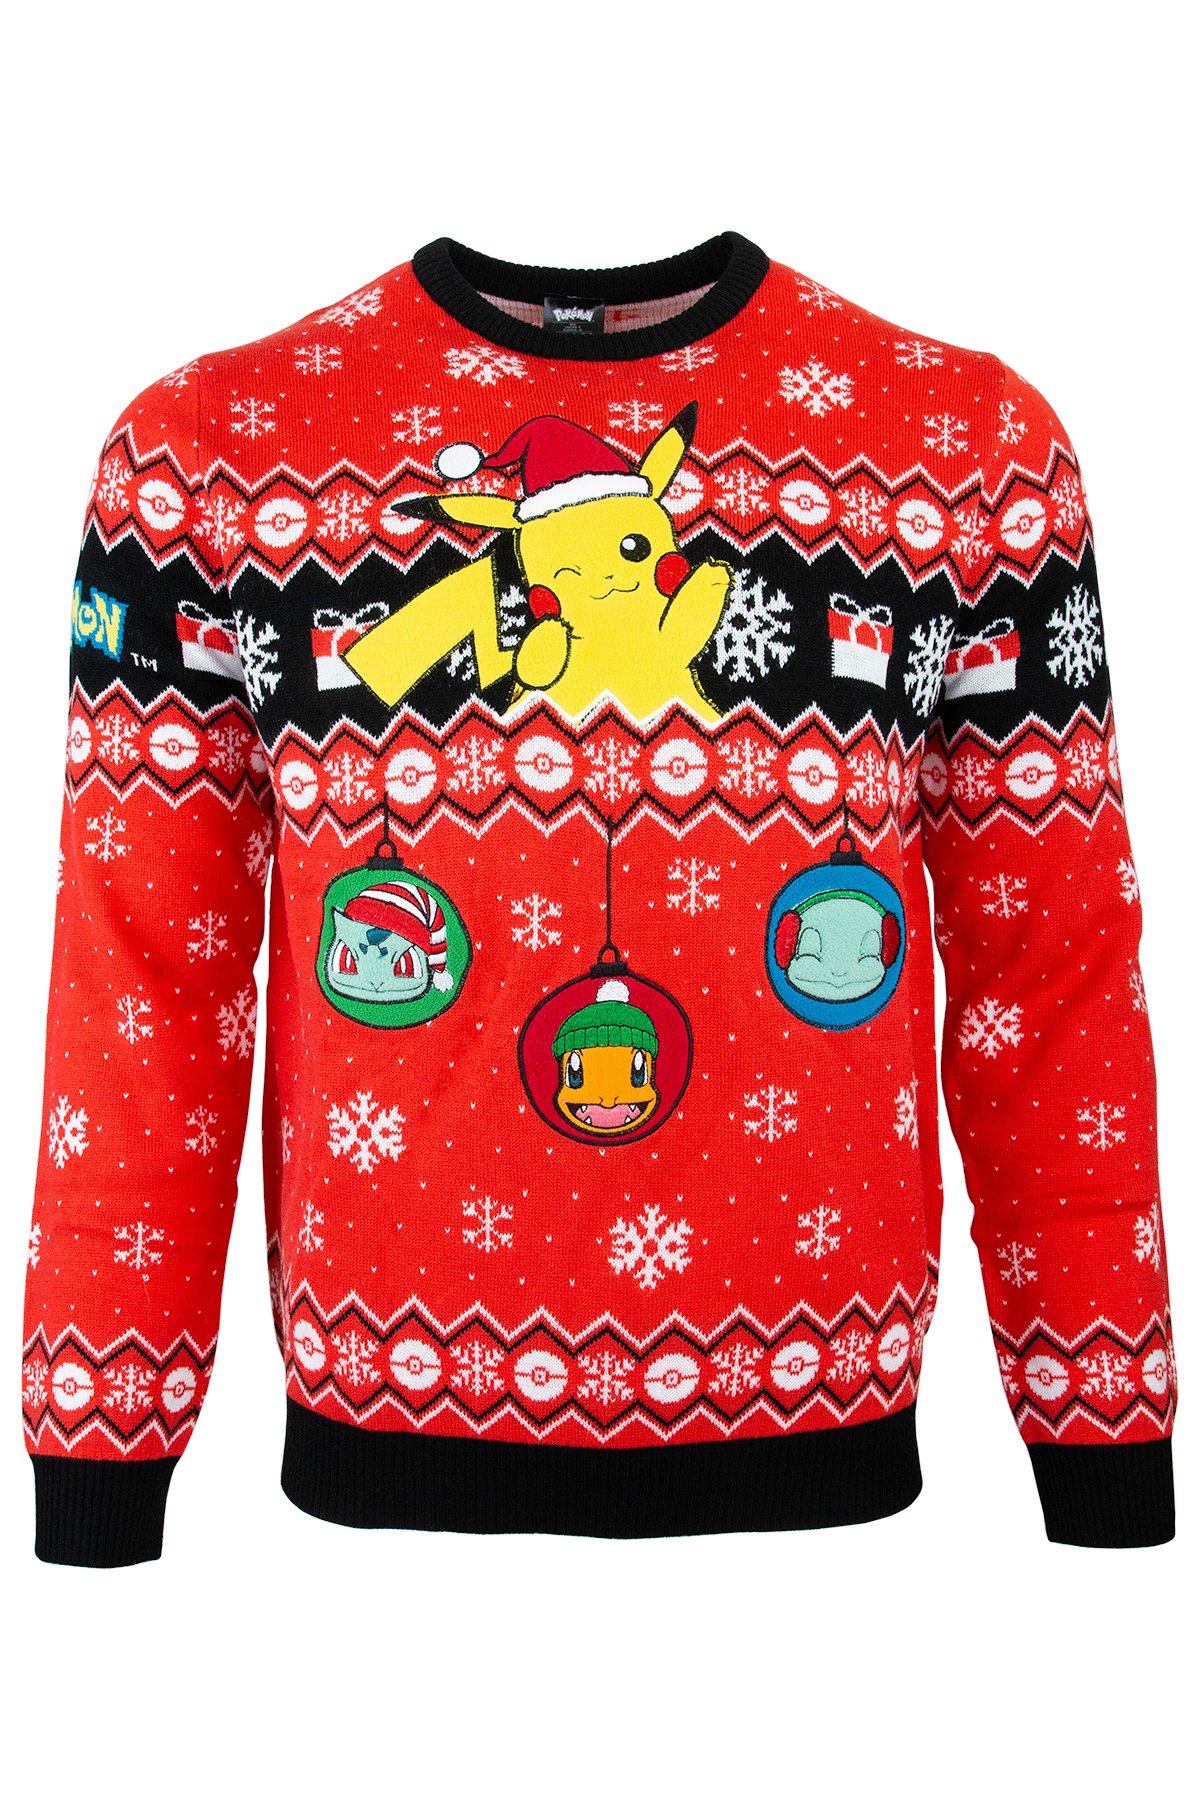 Pokemon pikachu christmas sweater and jumper – alchemytee121120